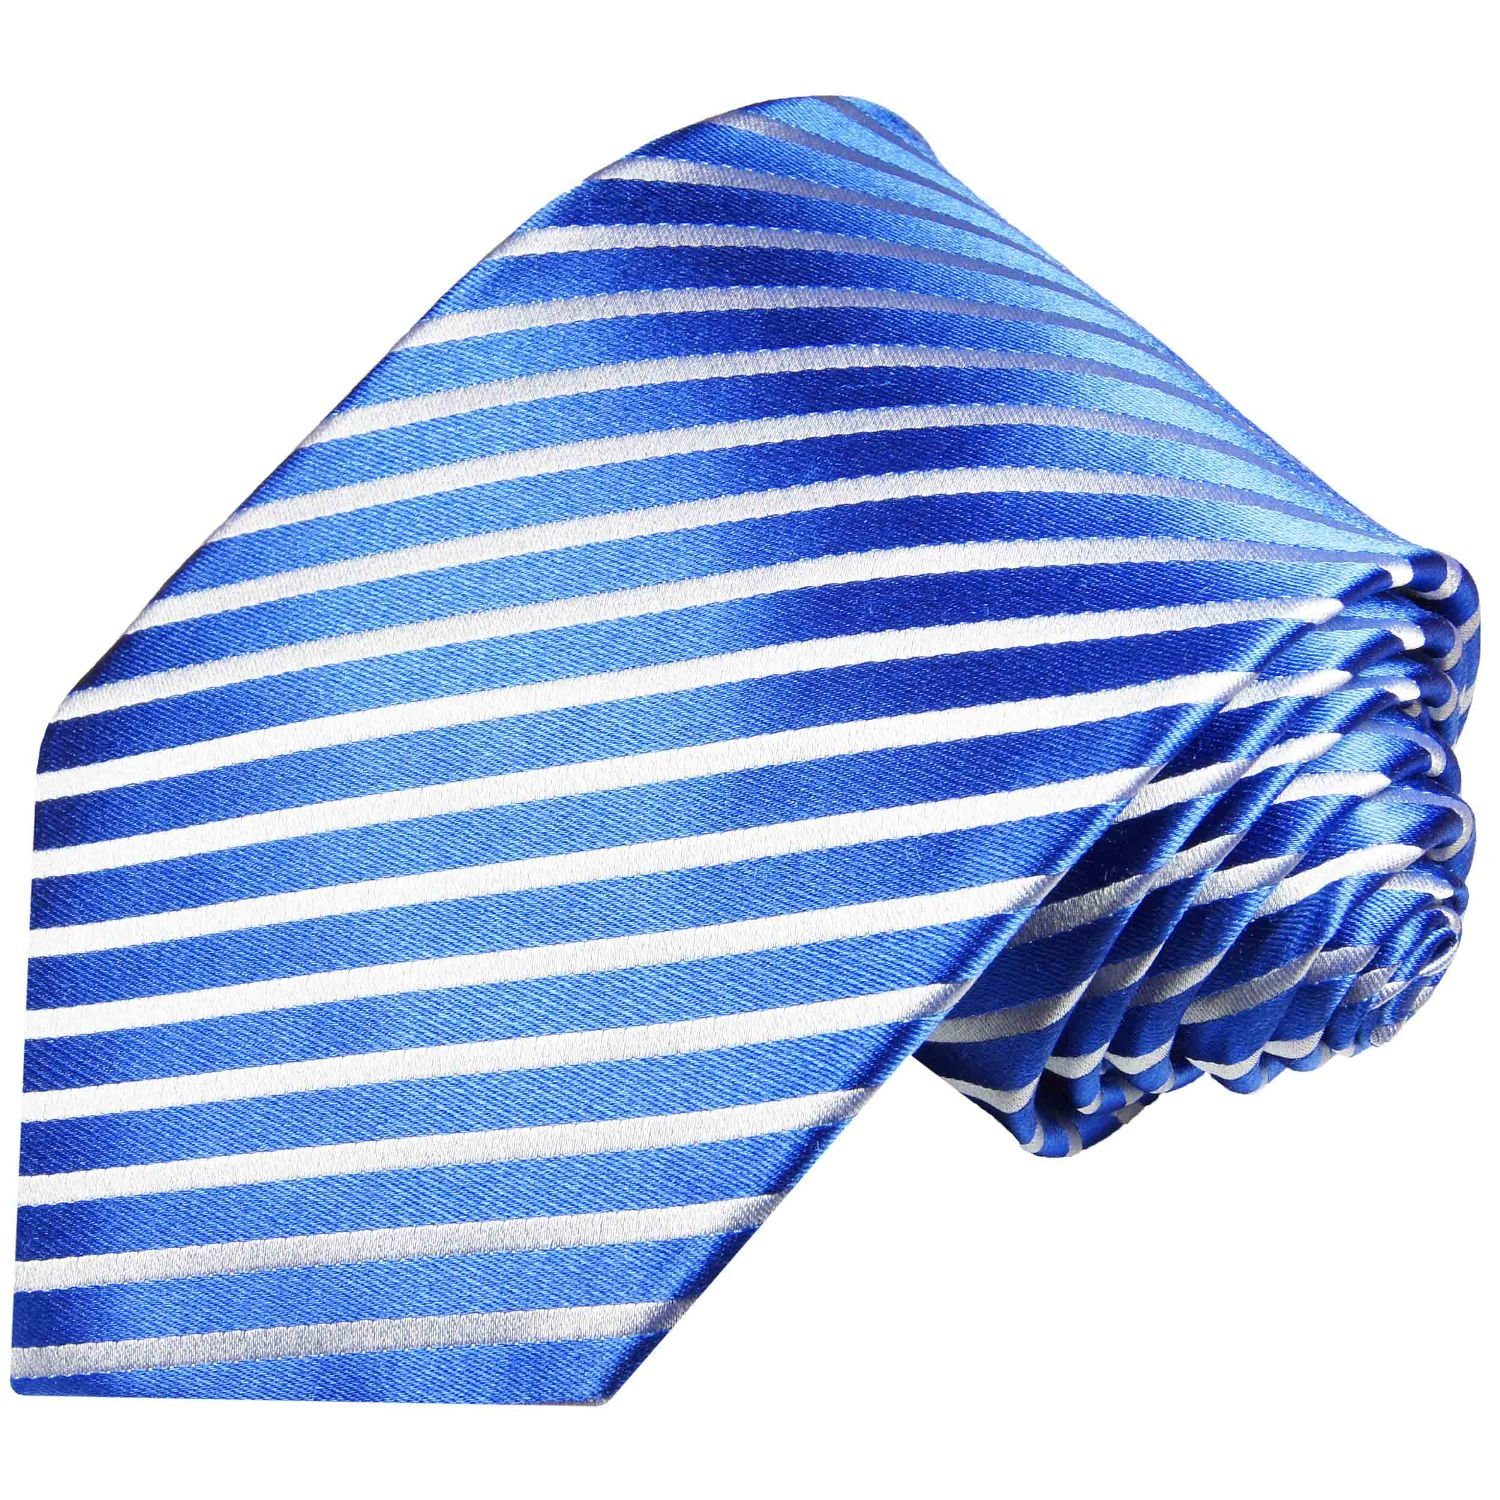 Paul Malone Krawatte Herren Seidenkrawatte Schlips modern gestreift 100% Seide Breit (8cm), blau 923